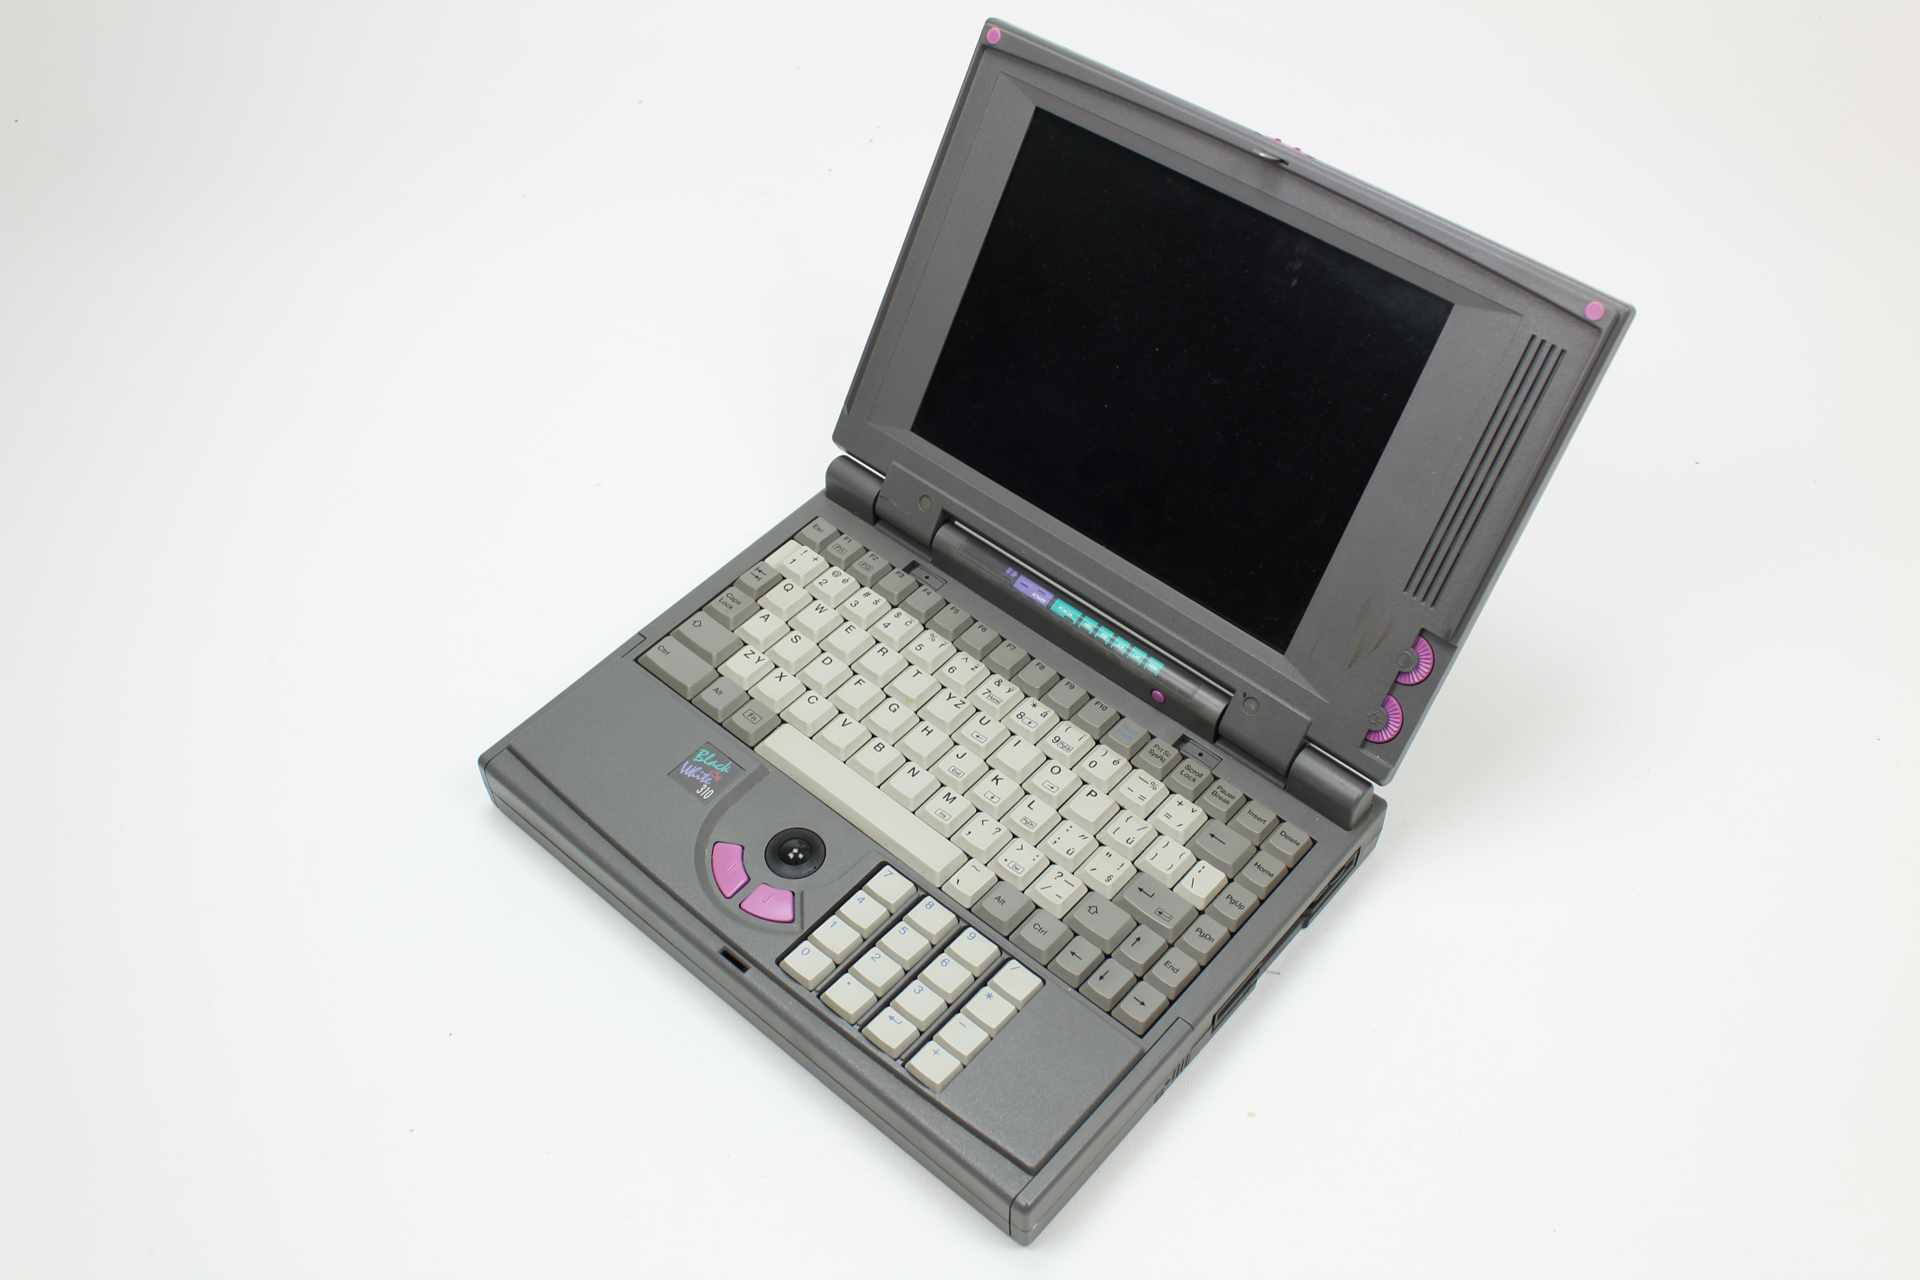 InnovACE HyperBook 300